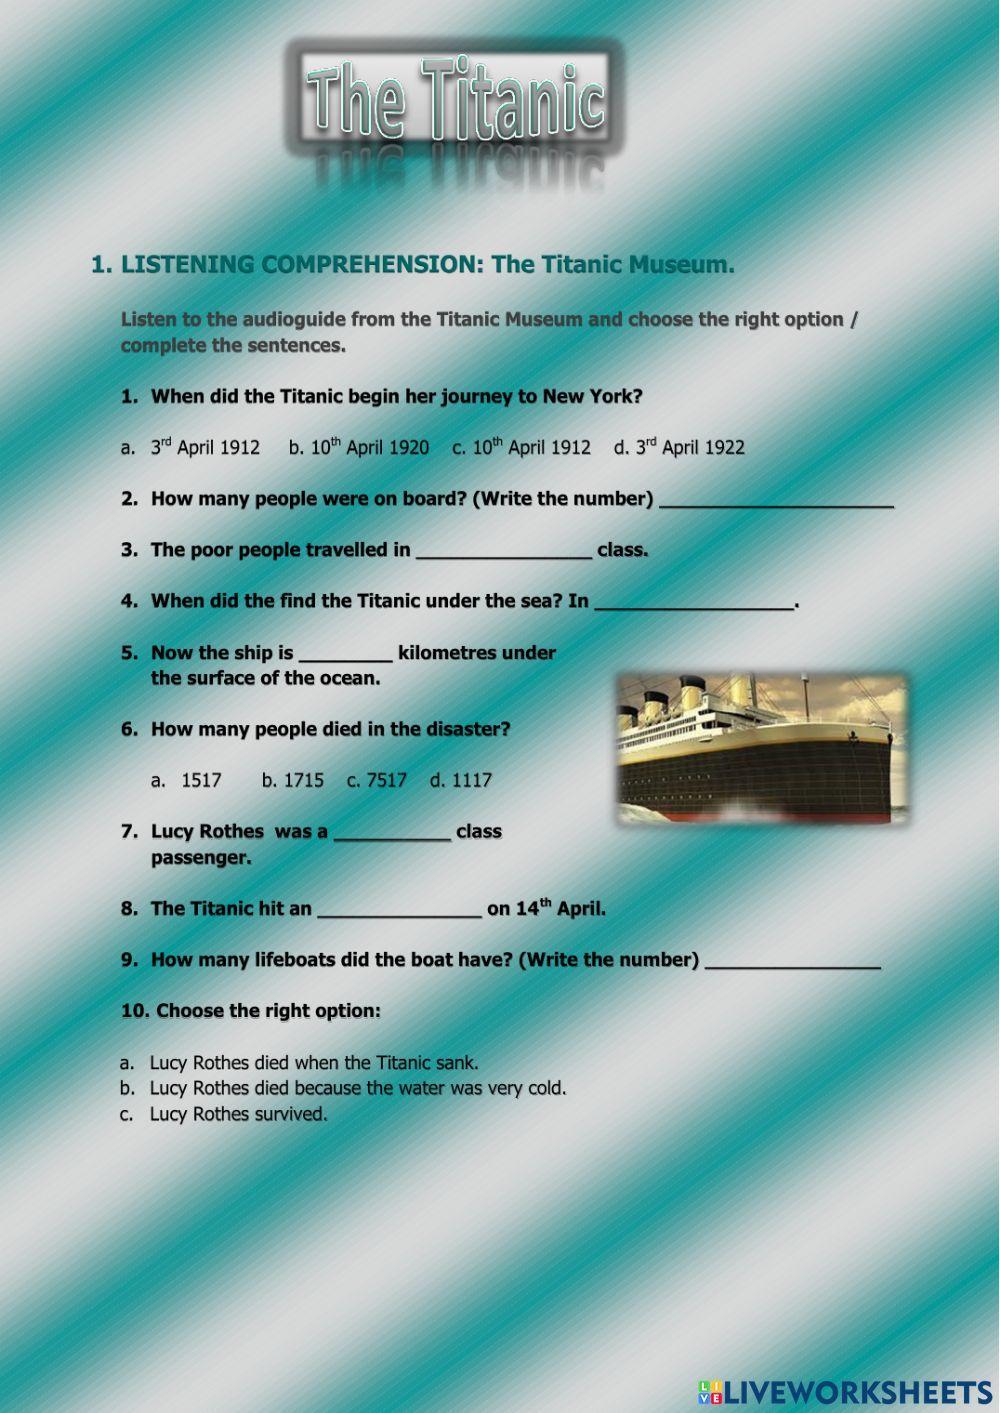 The Titanic Museum: Listening